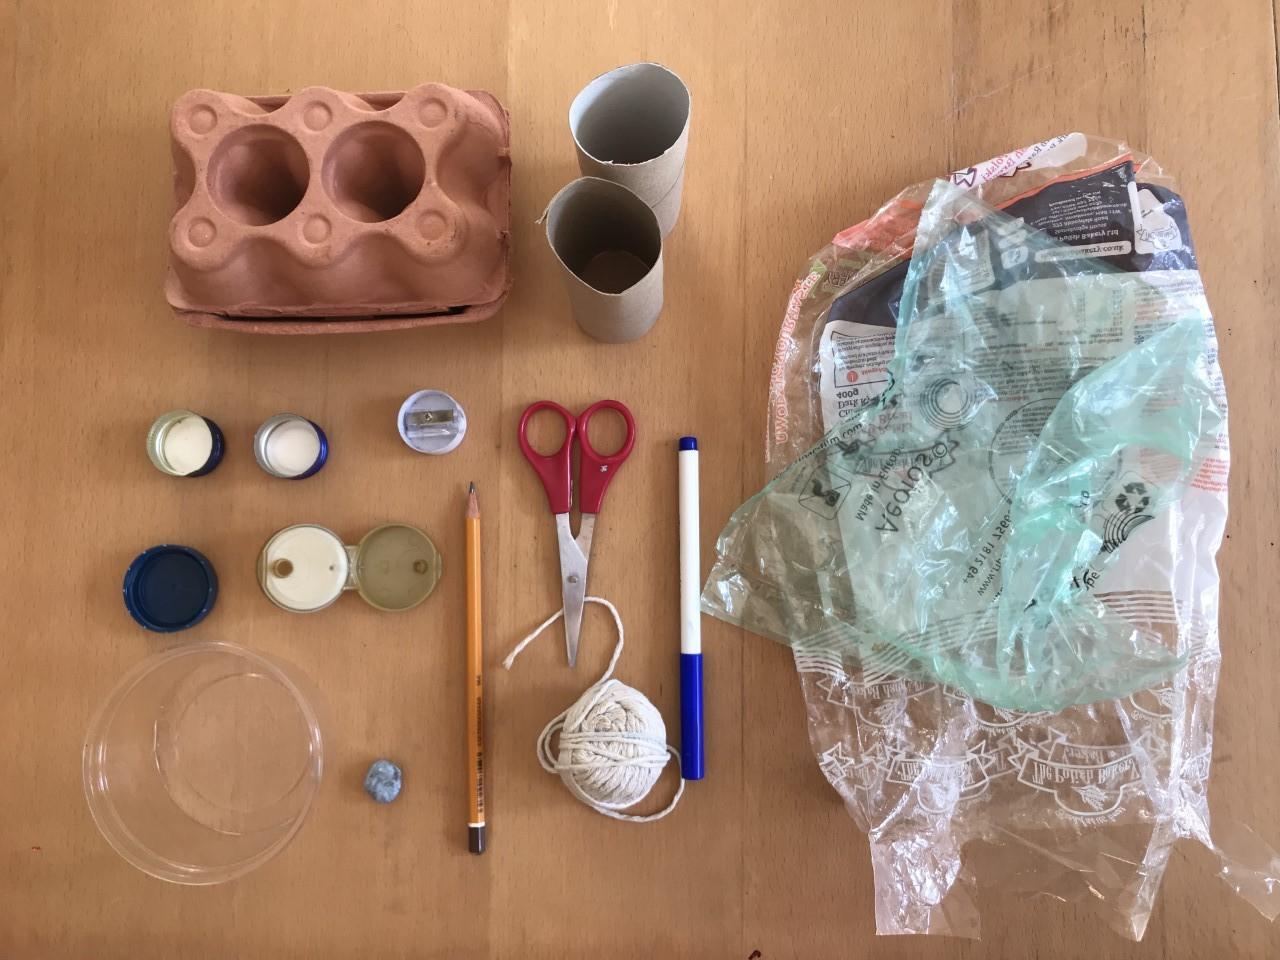 2 loo rolls, Plastic packaging, string, Pen, Pencil and sharpener, Scissors, Plastic bottle tops, Egg box, Blue tac